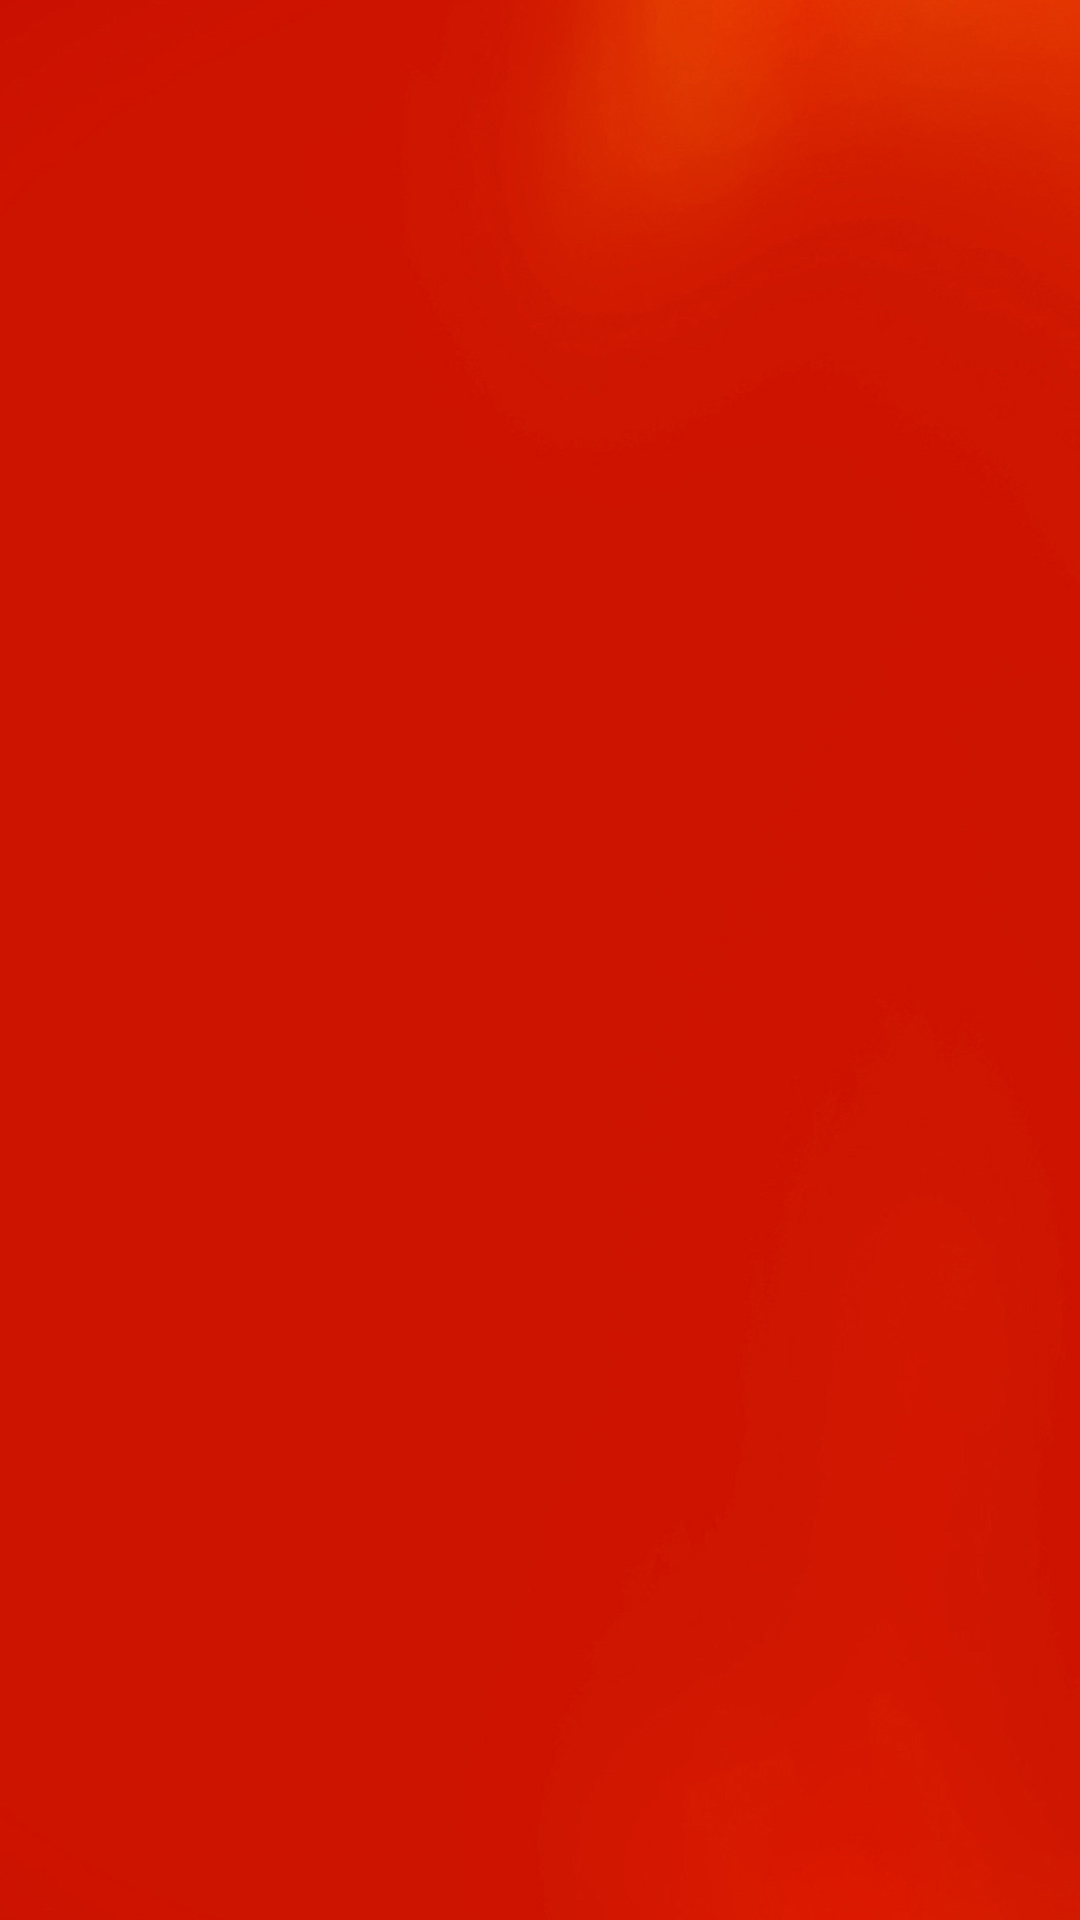 Red Texture Samsung Galaxy S5 Wallpaper